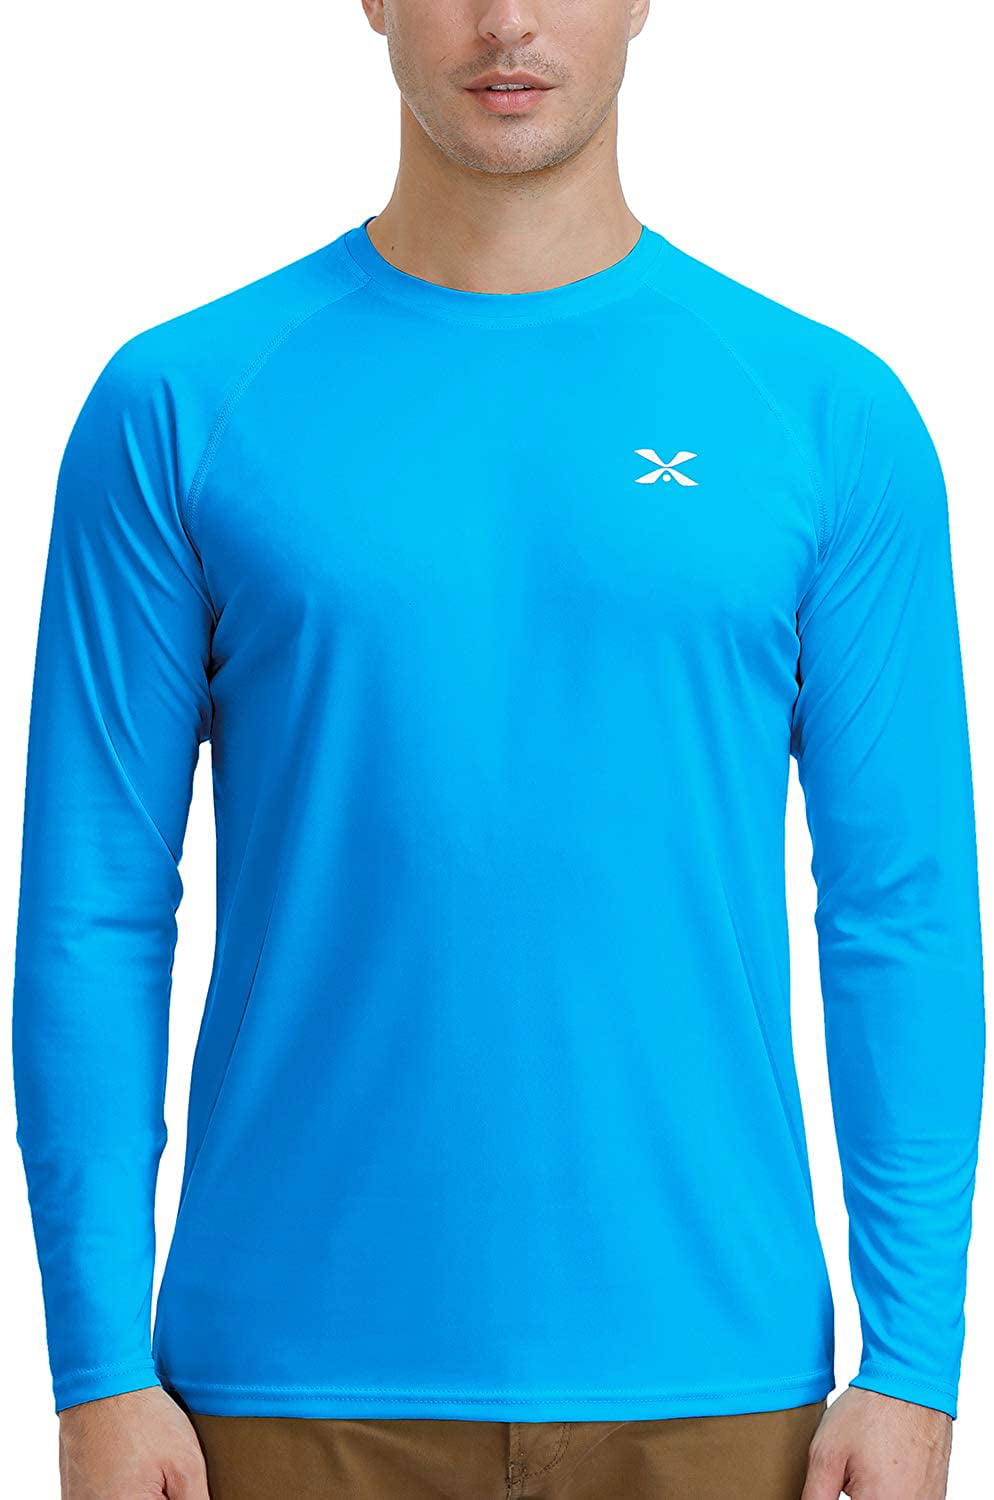 Sun Shirt Long Sleeve Quick Dry UV Protection Fishing Swim T Shirt Men's UPF 50 